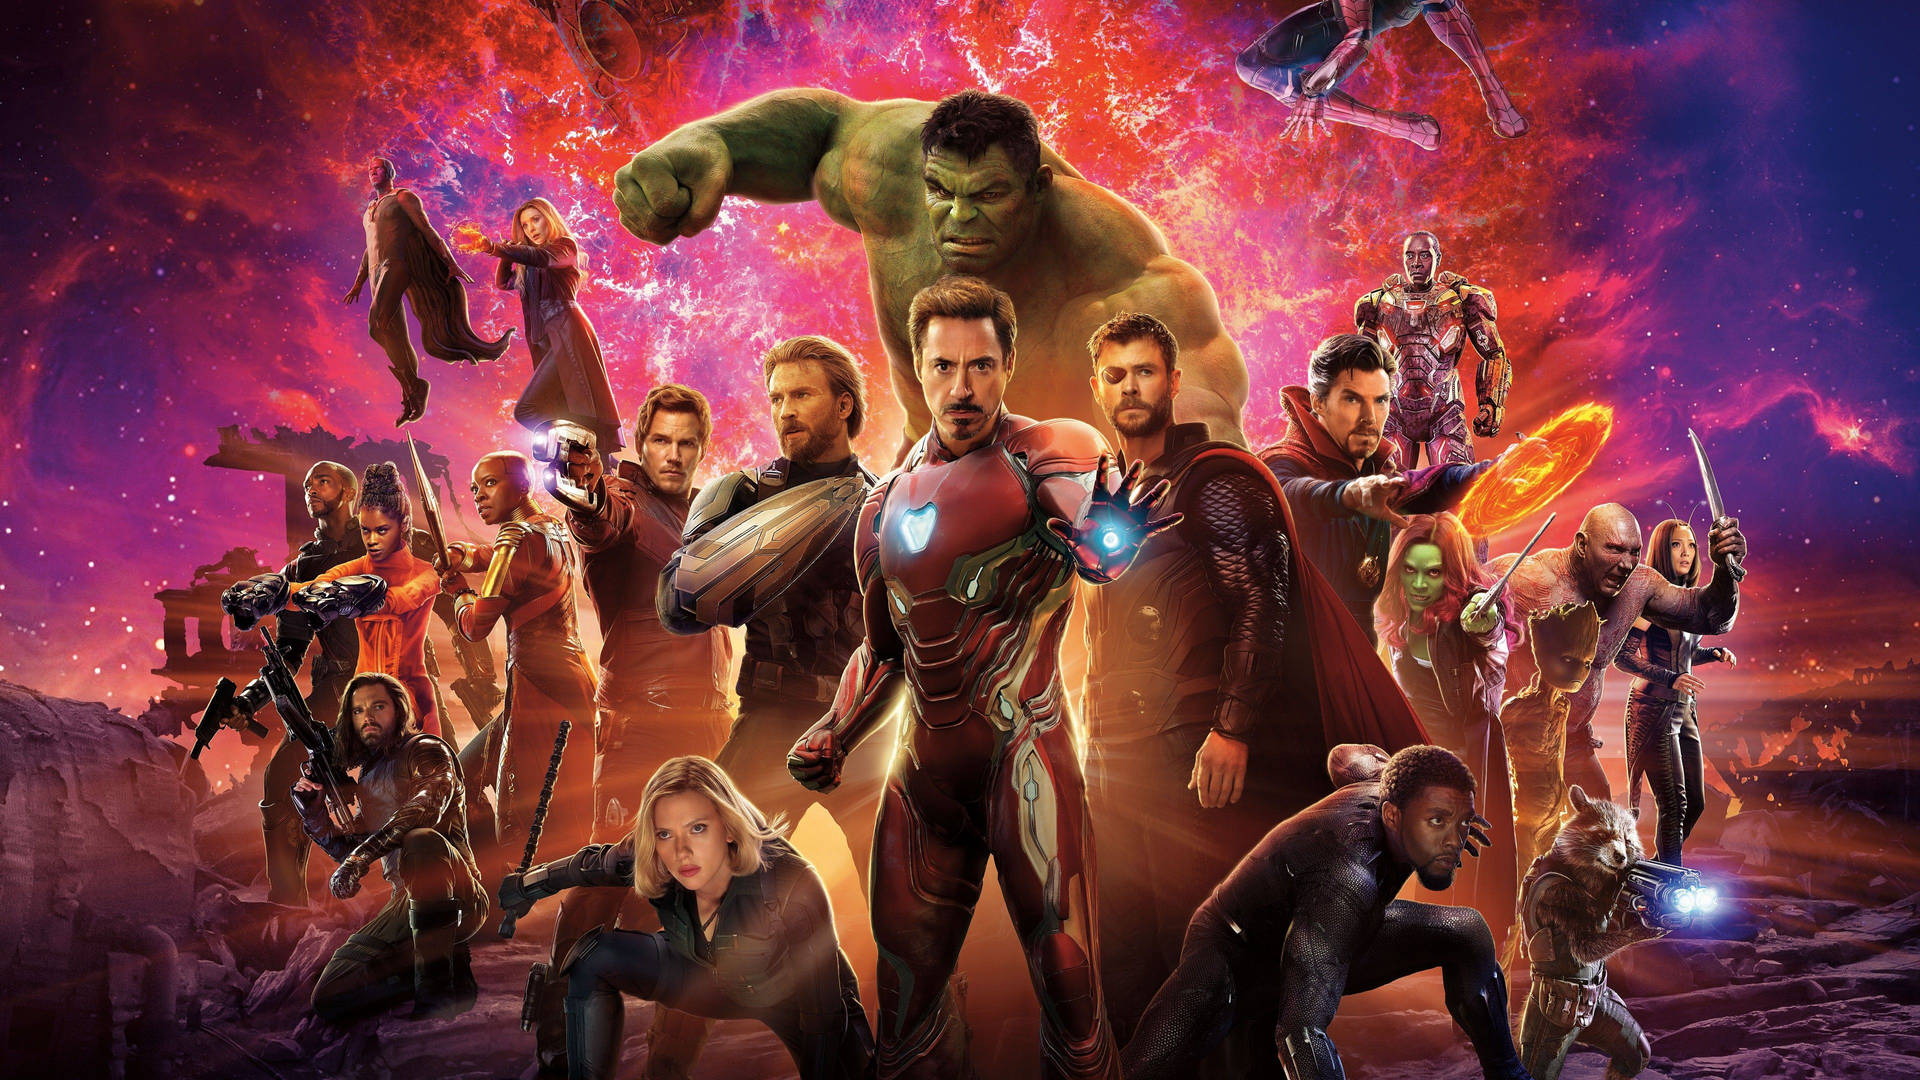 100+] Avengers Infinity War 4k Wallpapers | Wallpapers.com